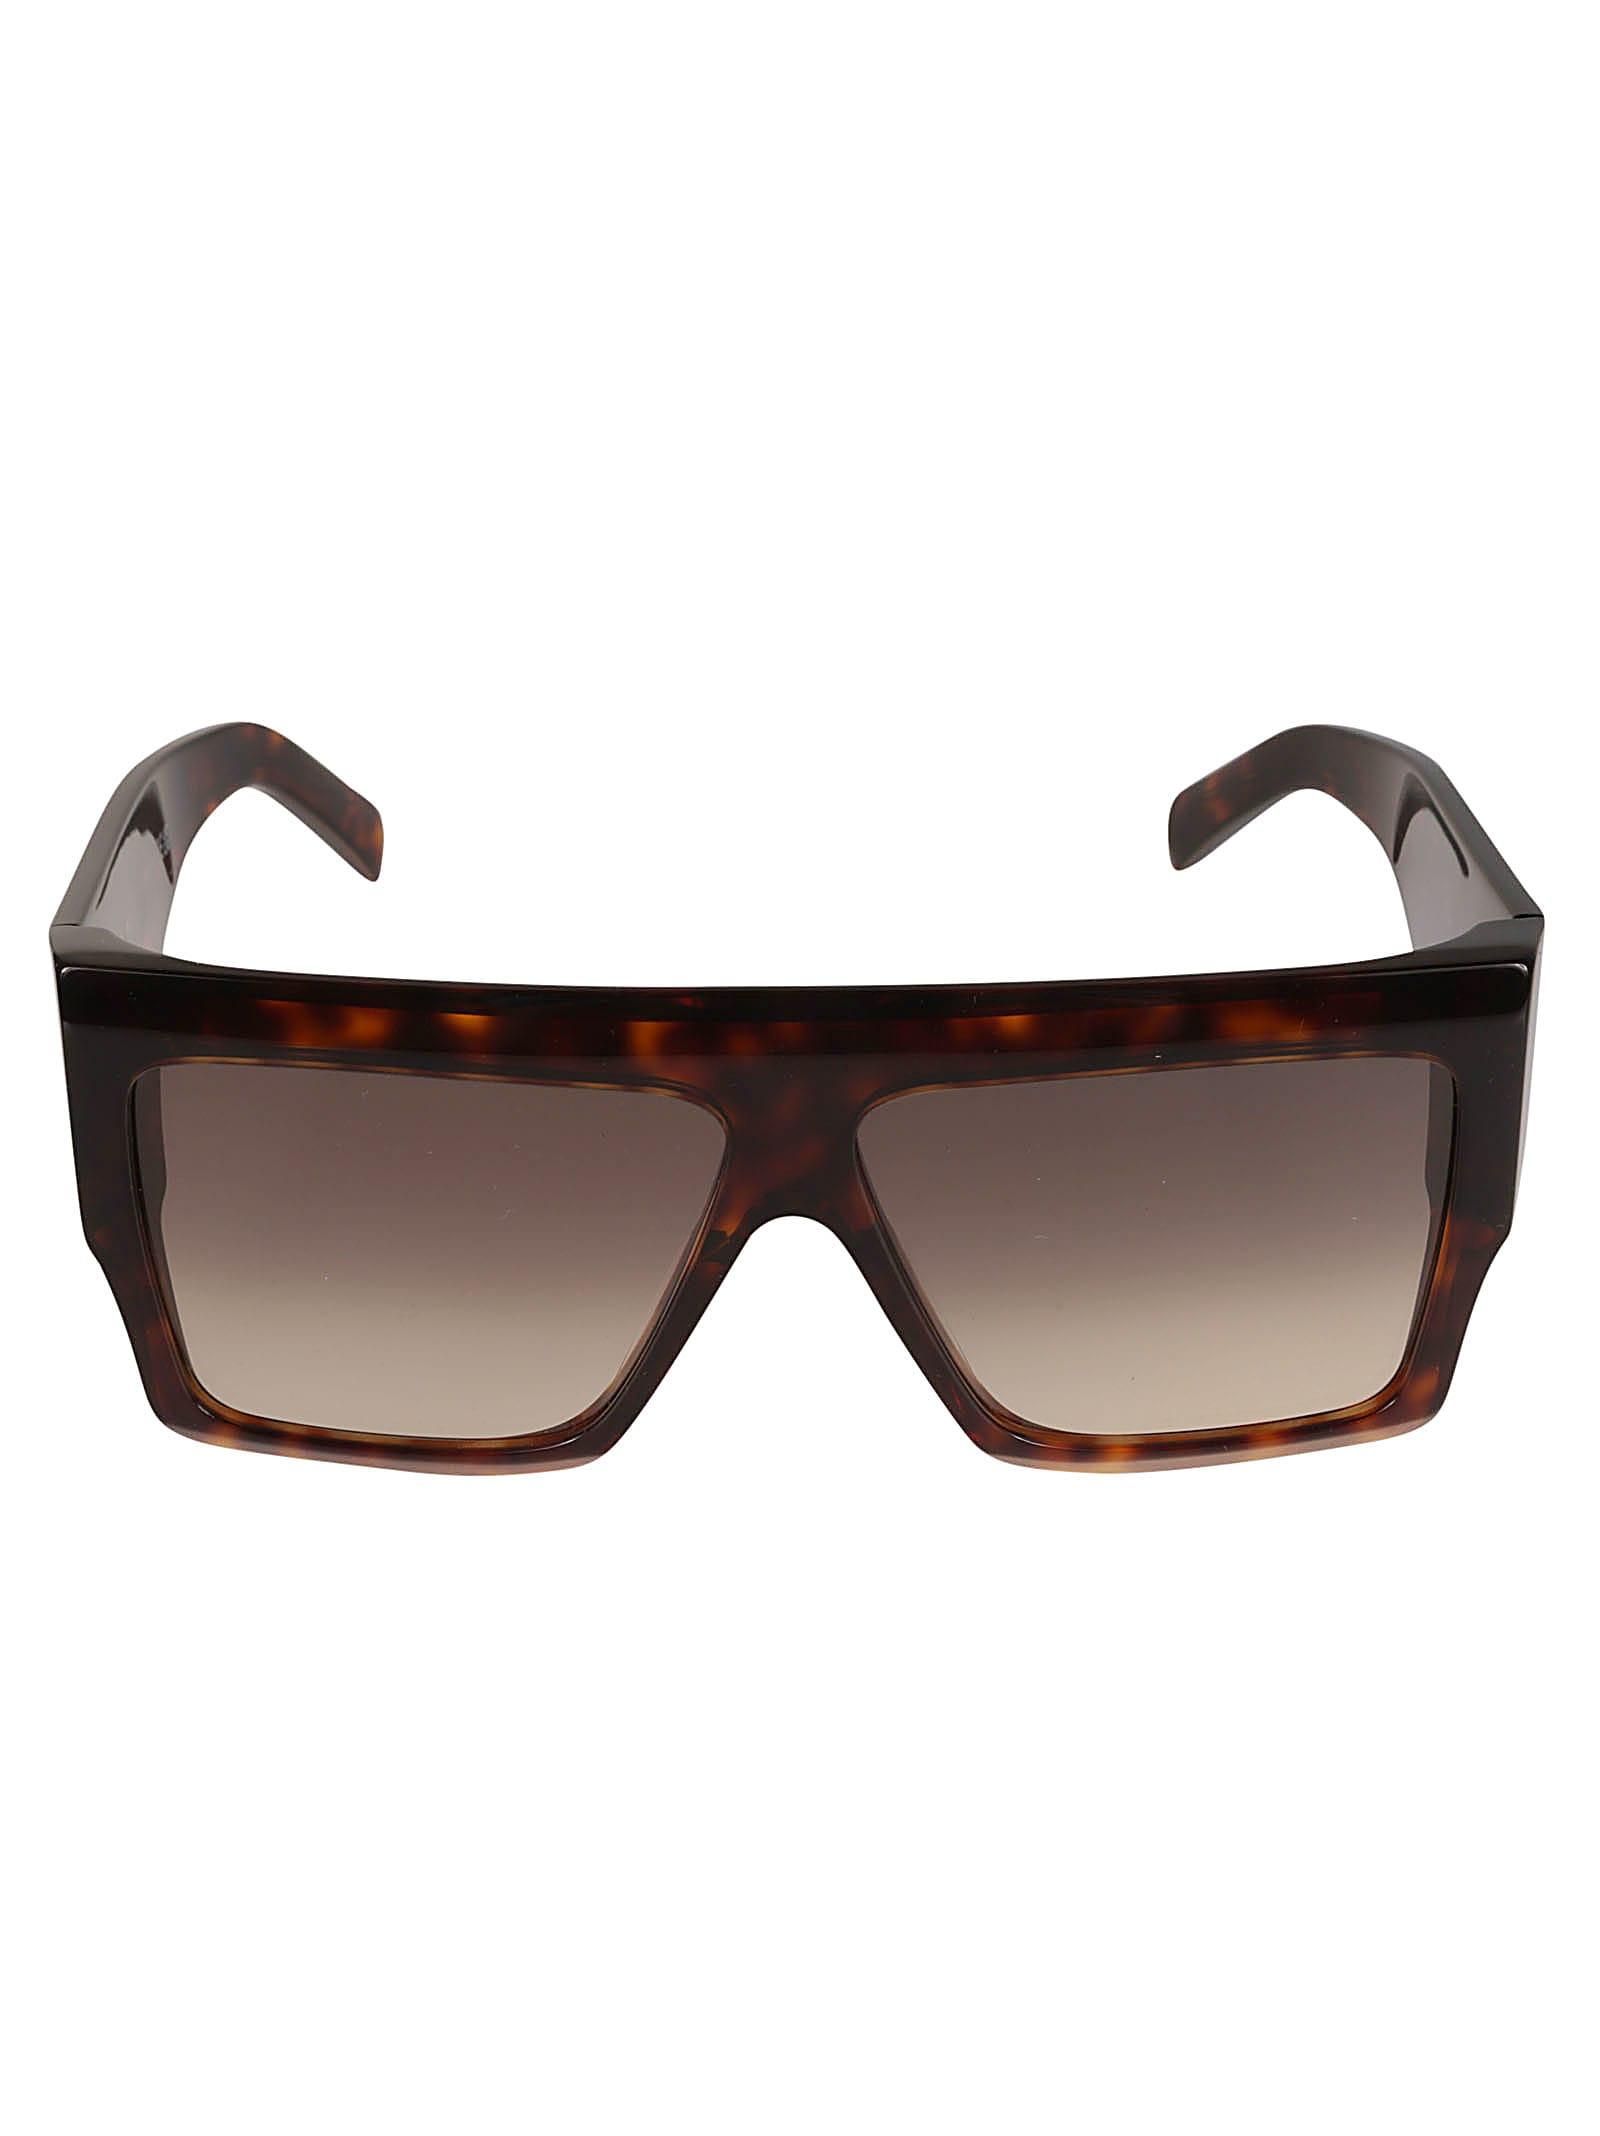 Celine Oversized Square Sunglasses in Brown